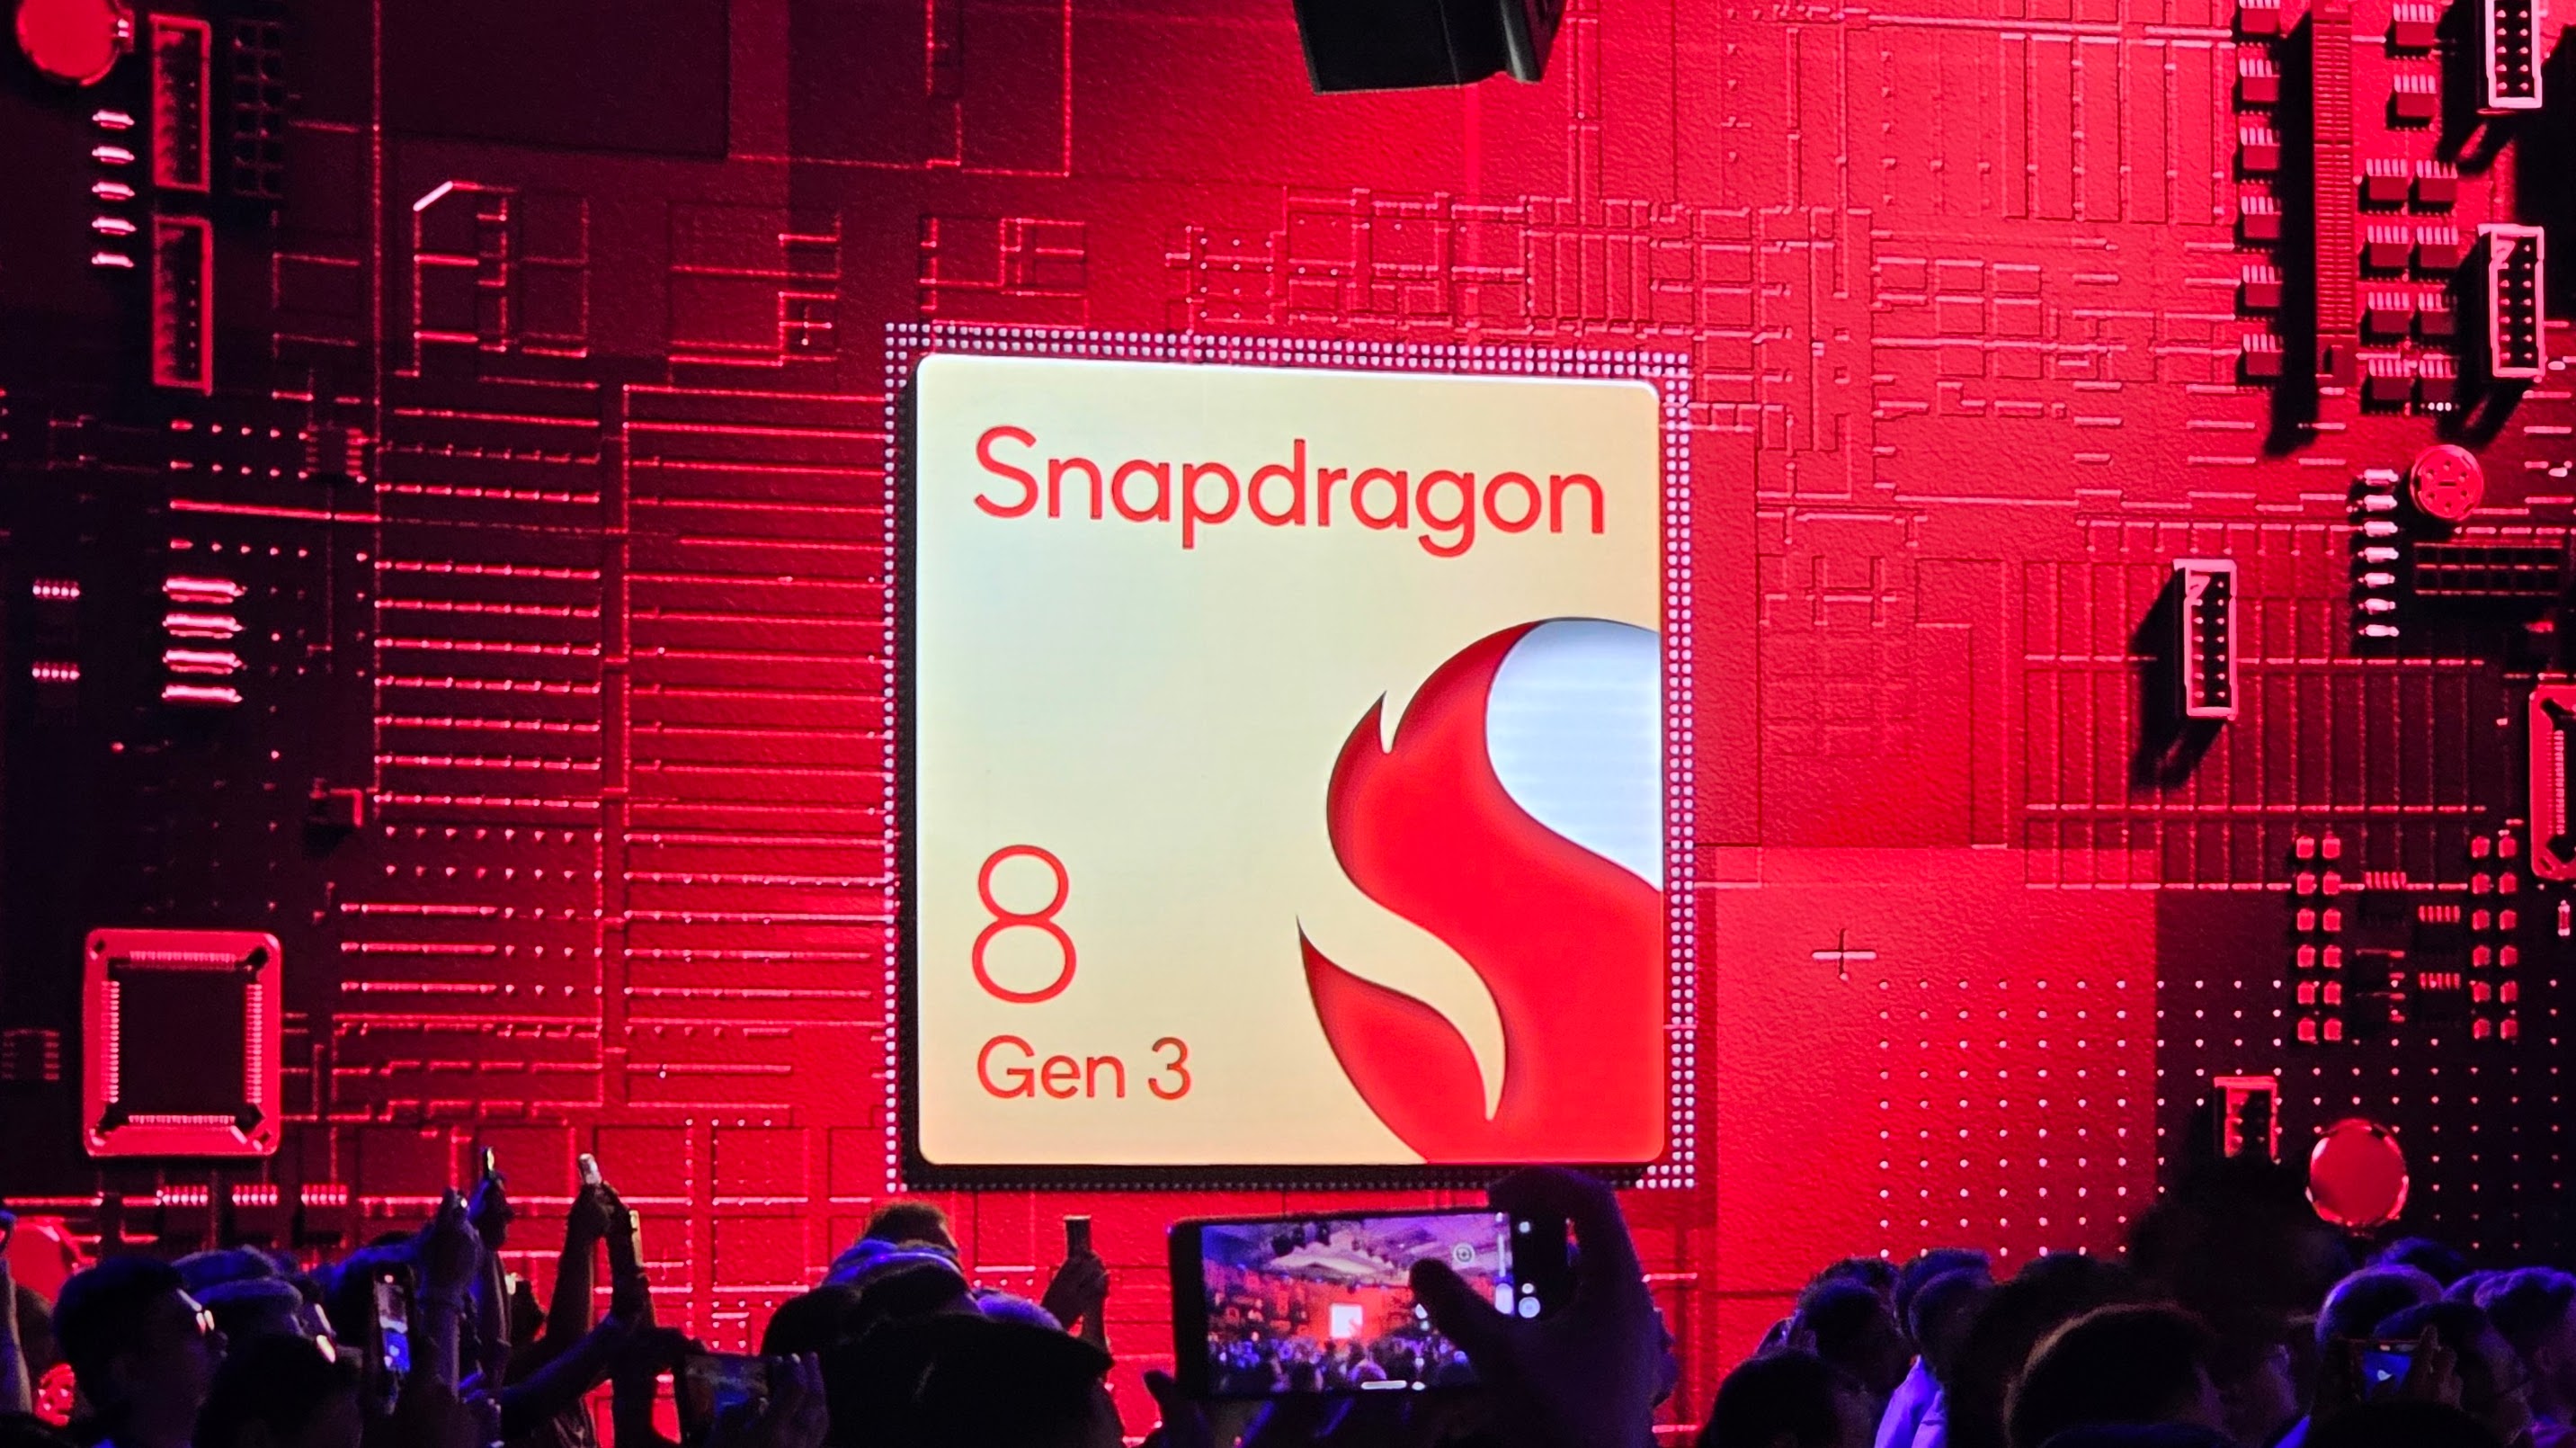 Qualcomm Snapdragon 8 Gen 3 logo from Snapdragon Summit event